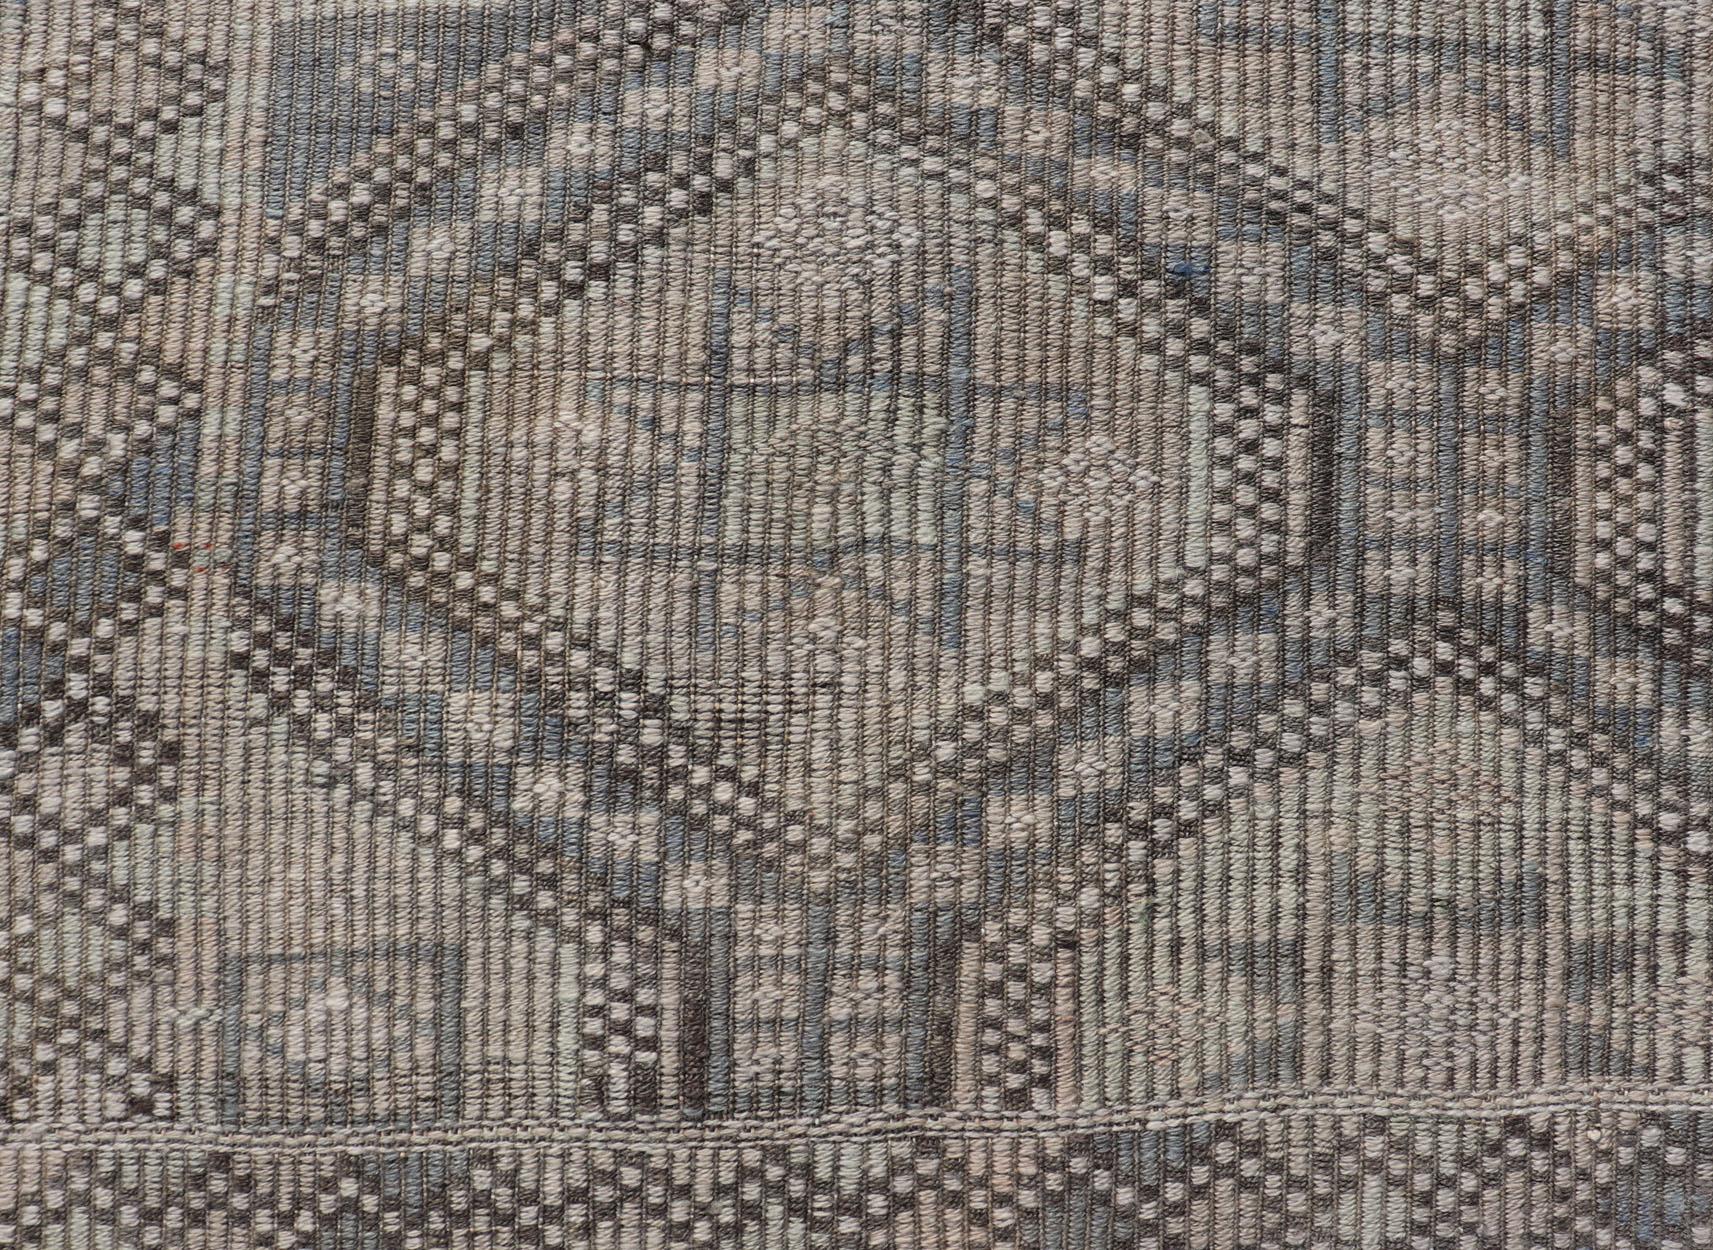 Kilim Vintage Turkish Embroidered Flat-Weave Rug with Geometric Diamond Design For Sale